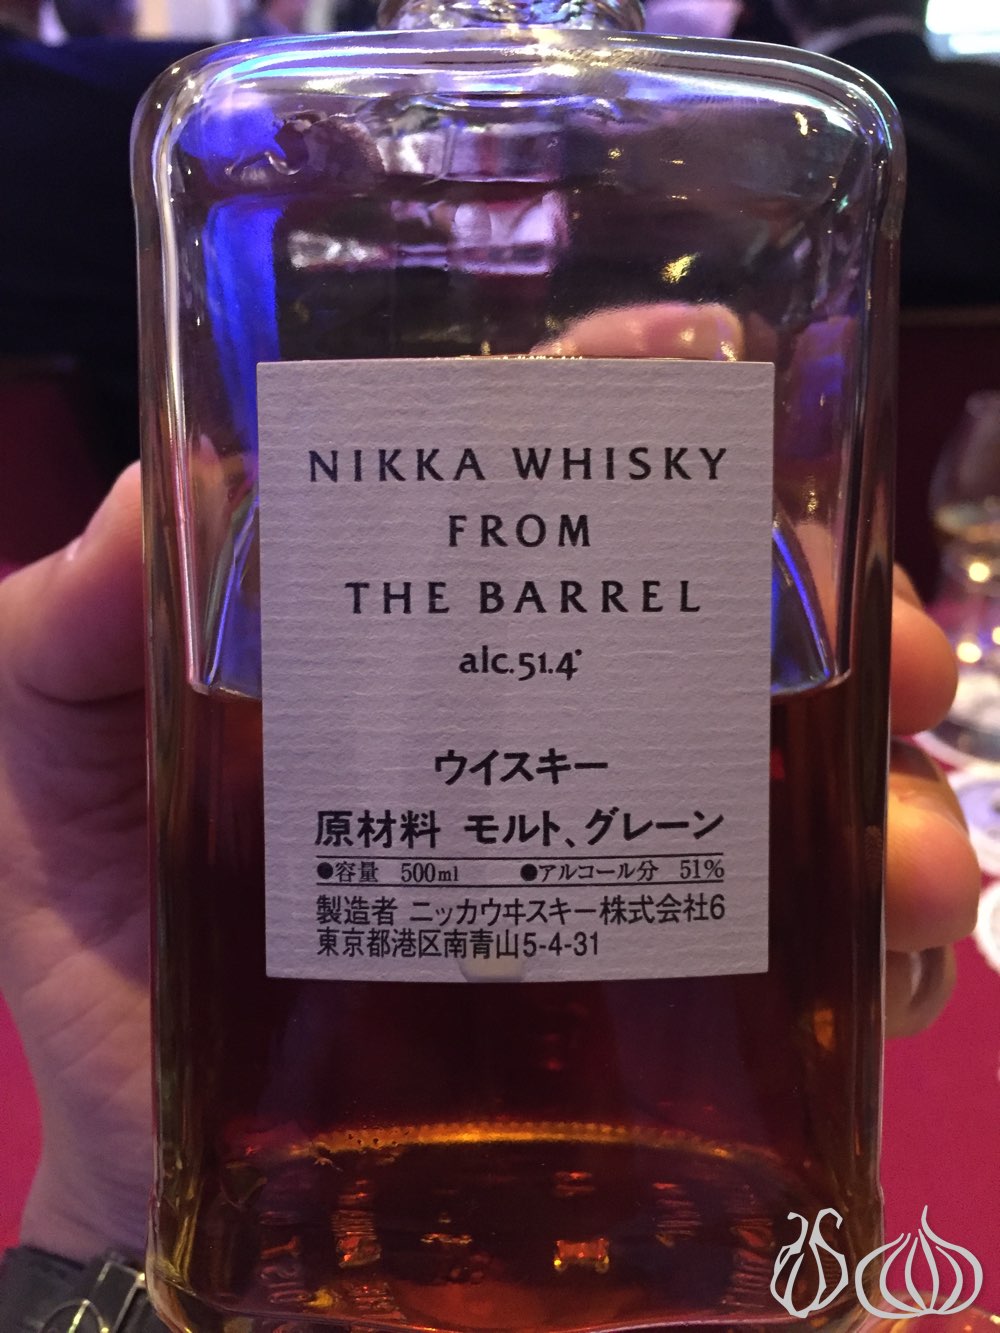 nikka-whisky-shogun-verdun132015-10-16-01-37-28